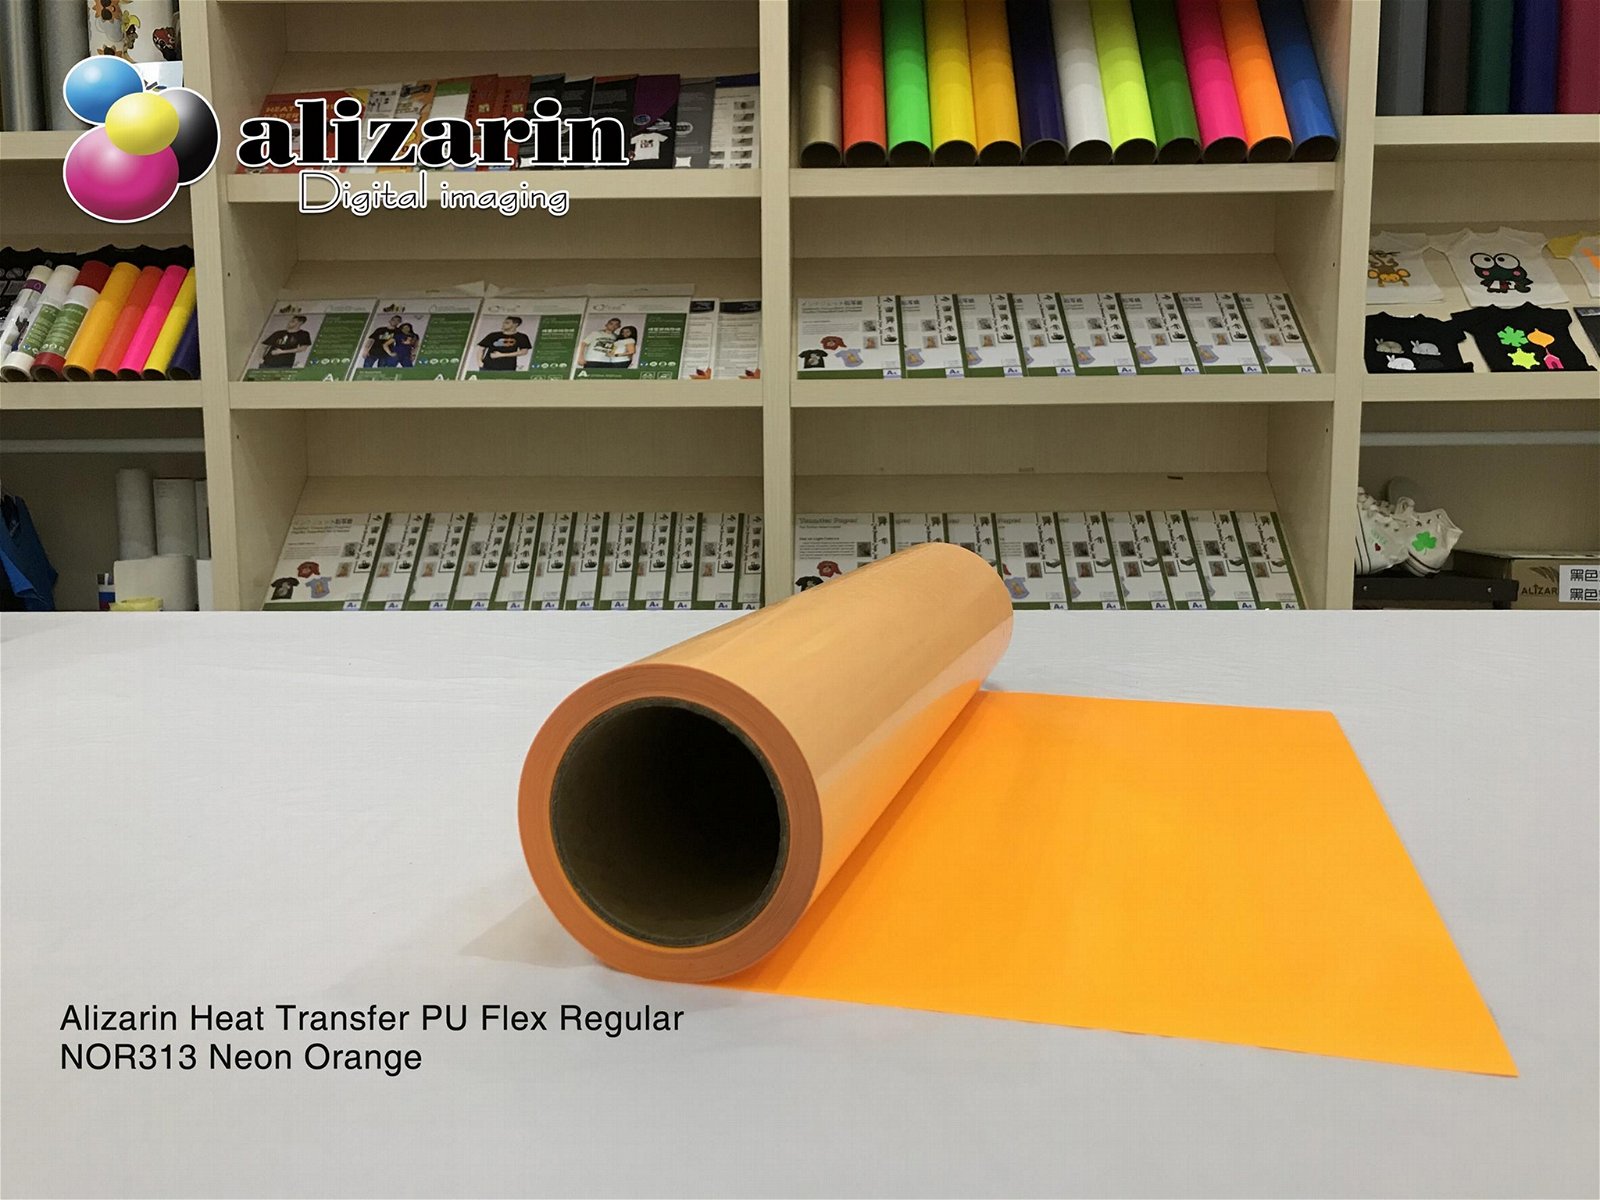 Alizarin Cuttable Heat Transfer PU Flex Regular（NOR313 Neon Orange)）